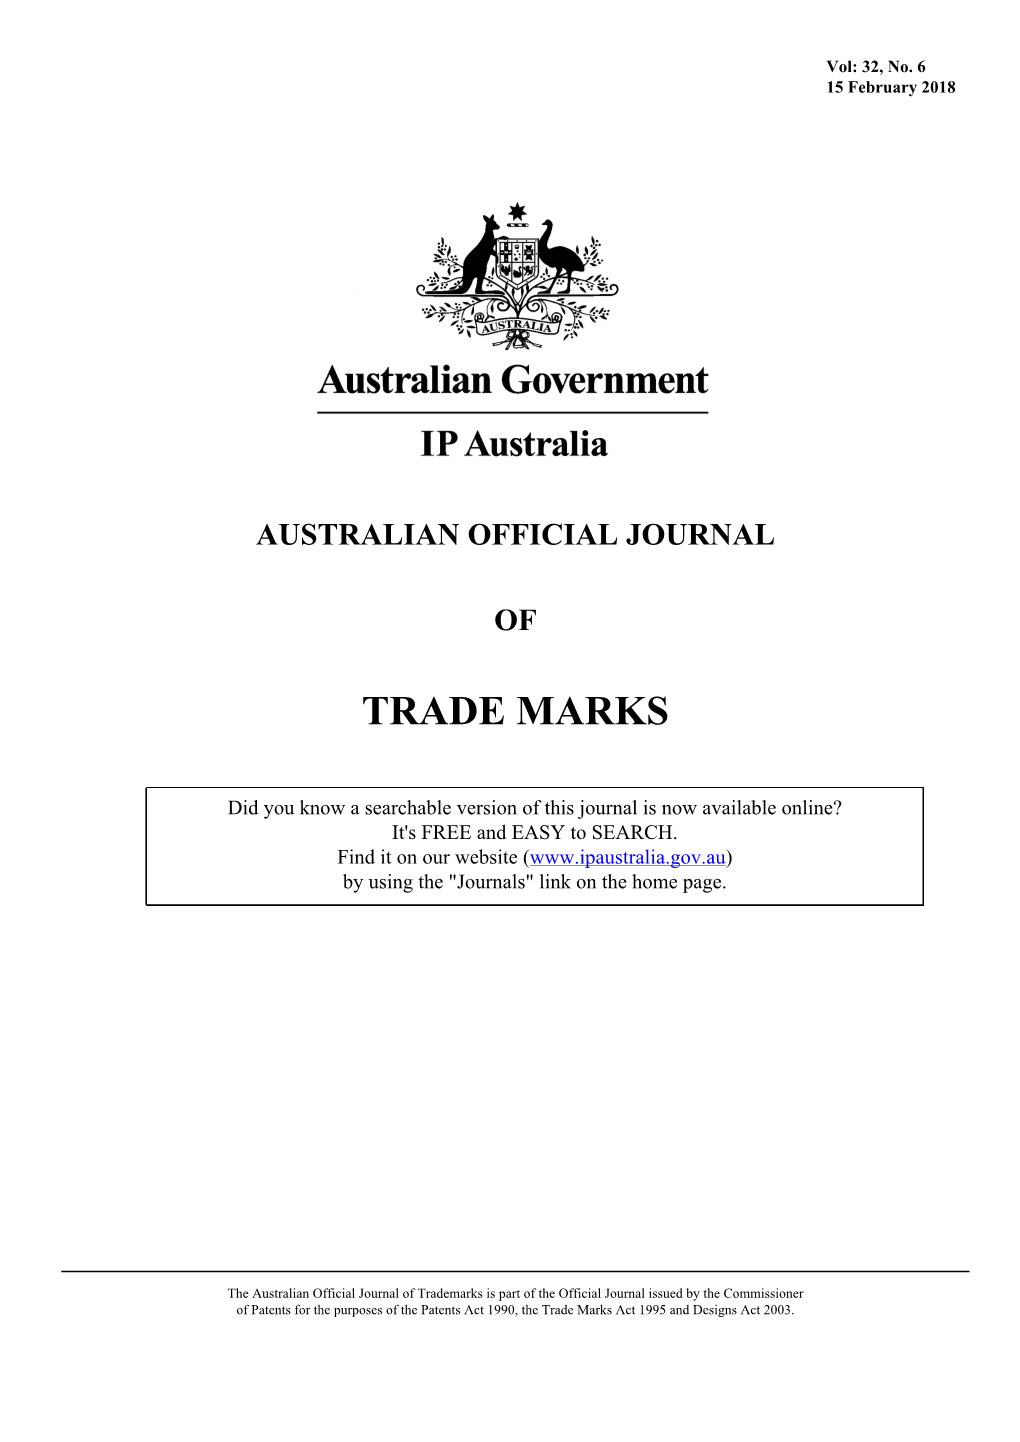 AUSTRALIAN OFFICIAL JOURNAL of TRADE MARKS 15 February 2018